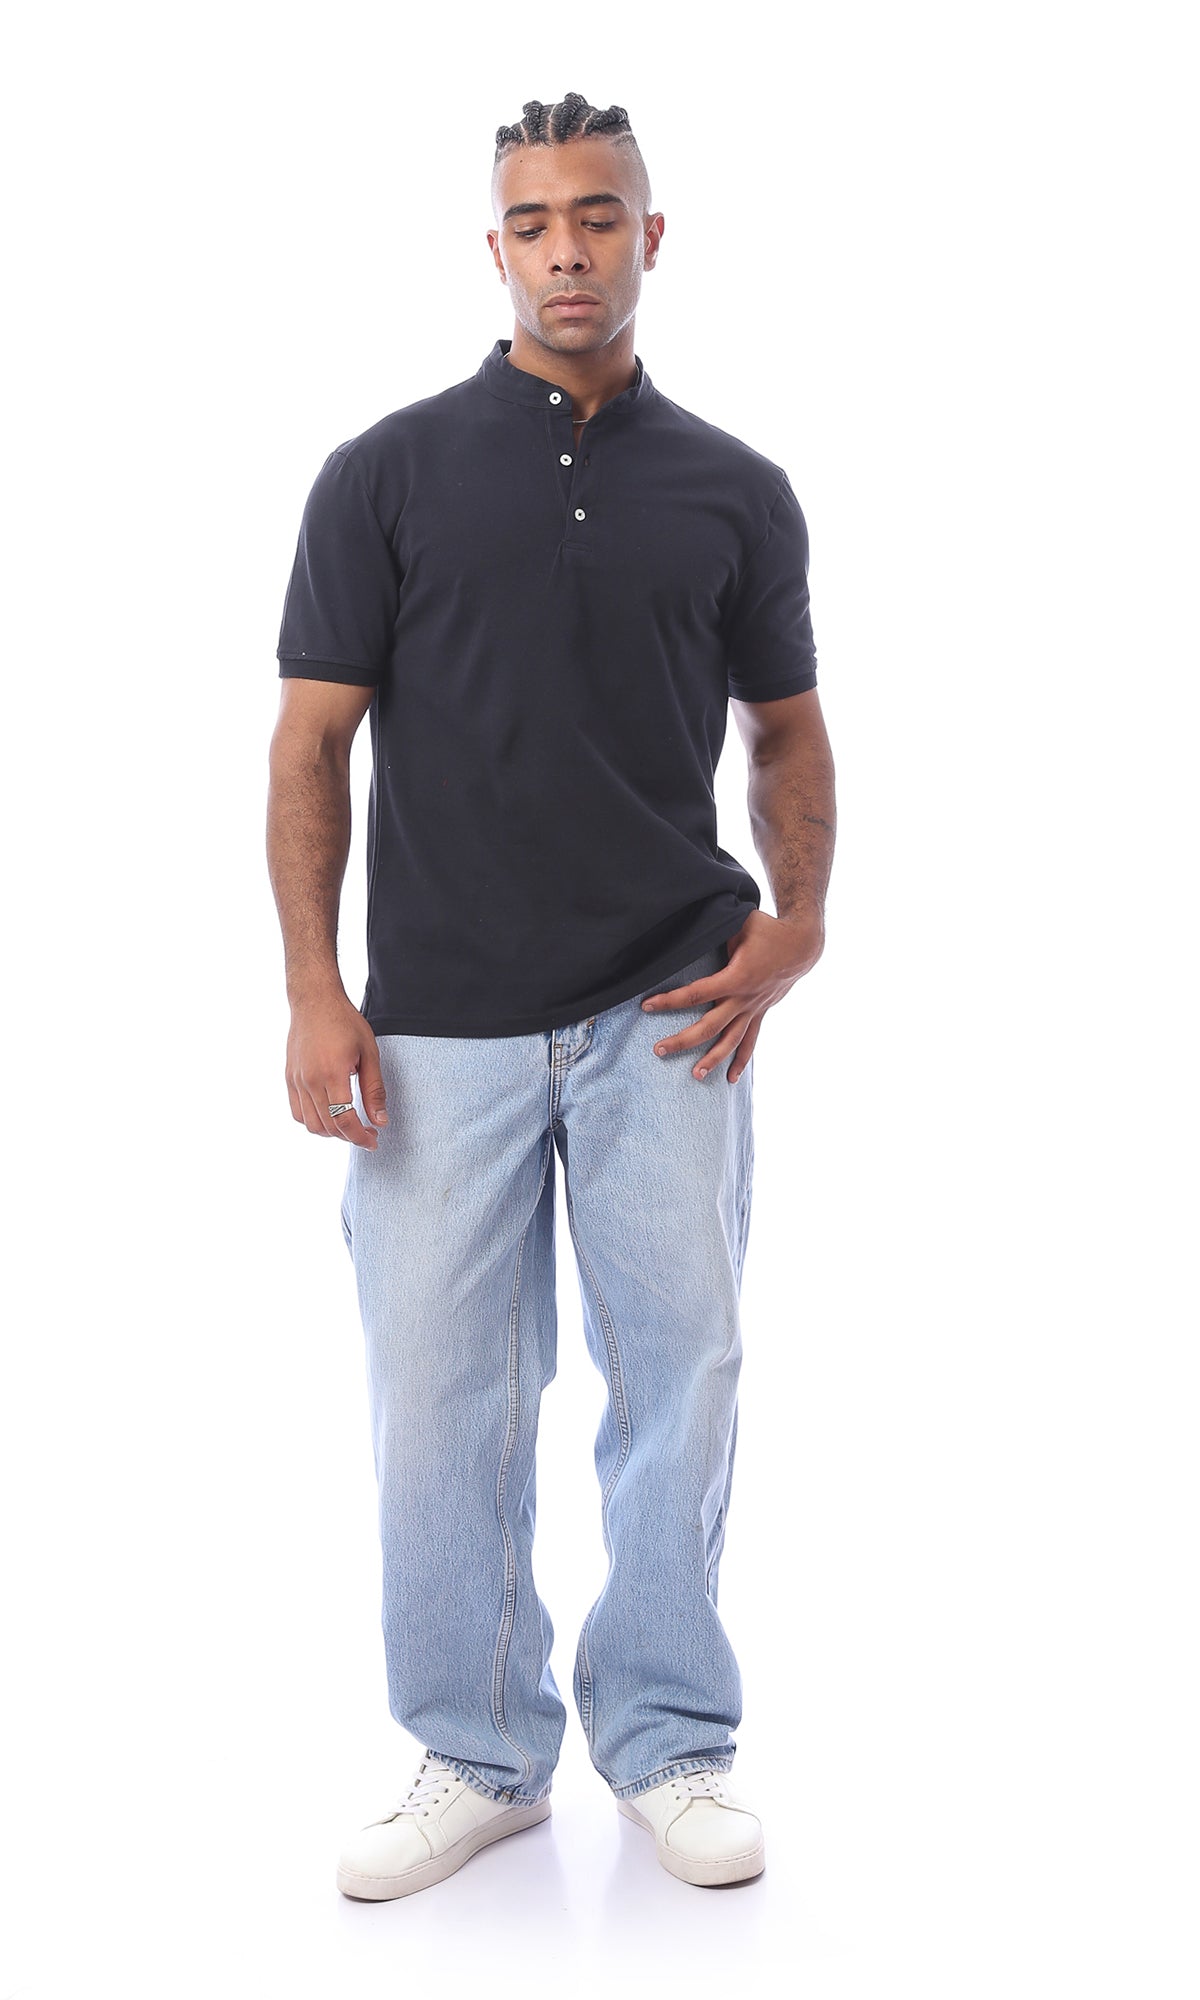 O167053 Solid Black Comfy Casual Polo Shirt